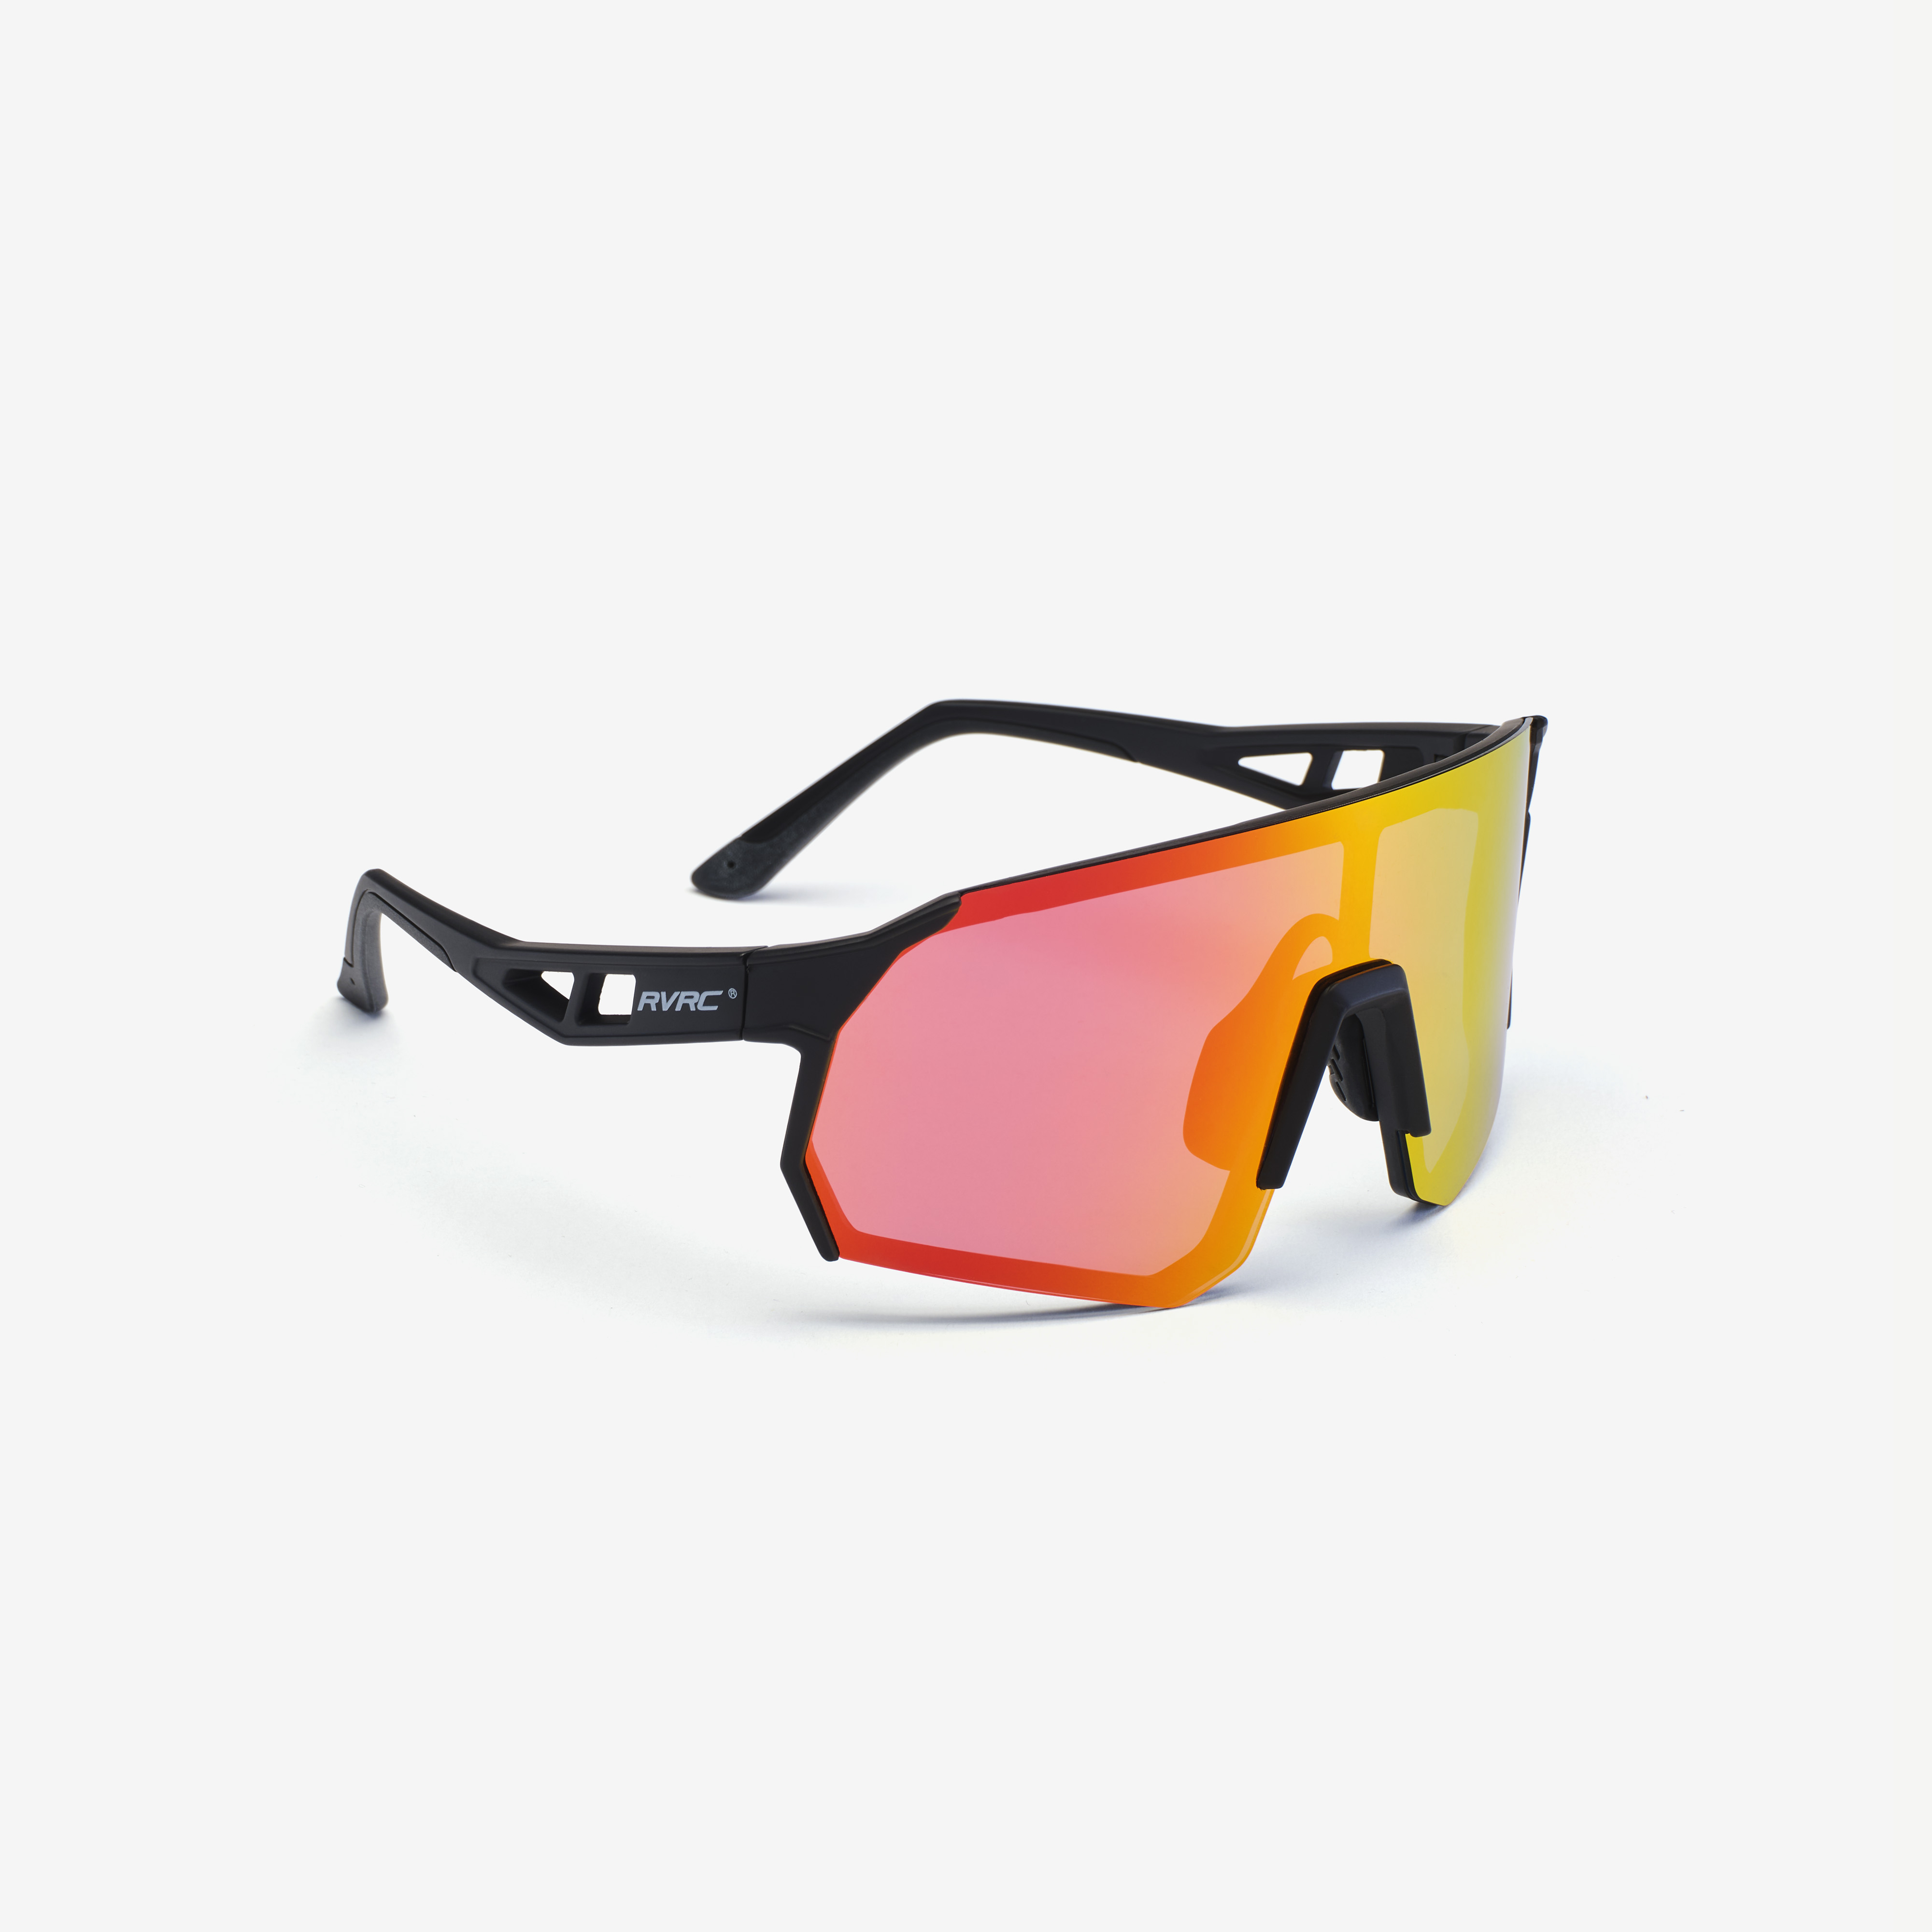 Castor Polarized Sports Sunglasses Black/Red Gold